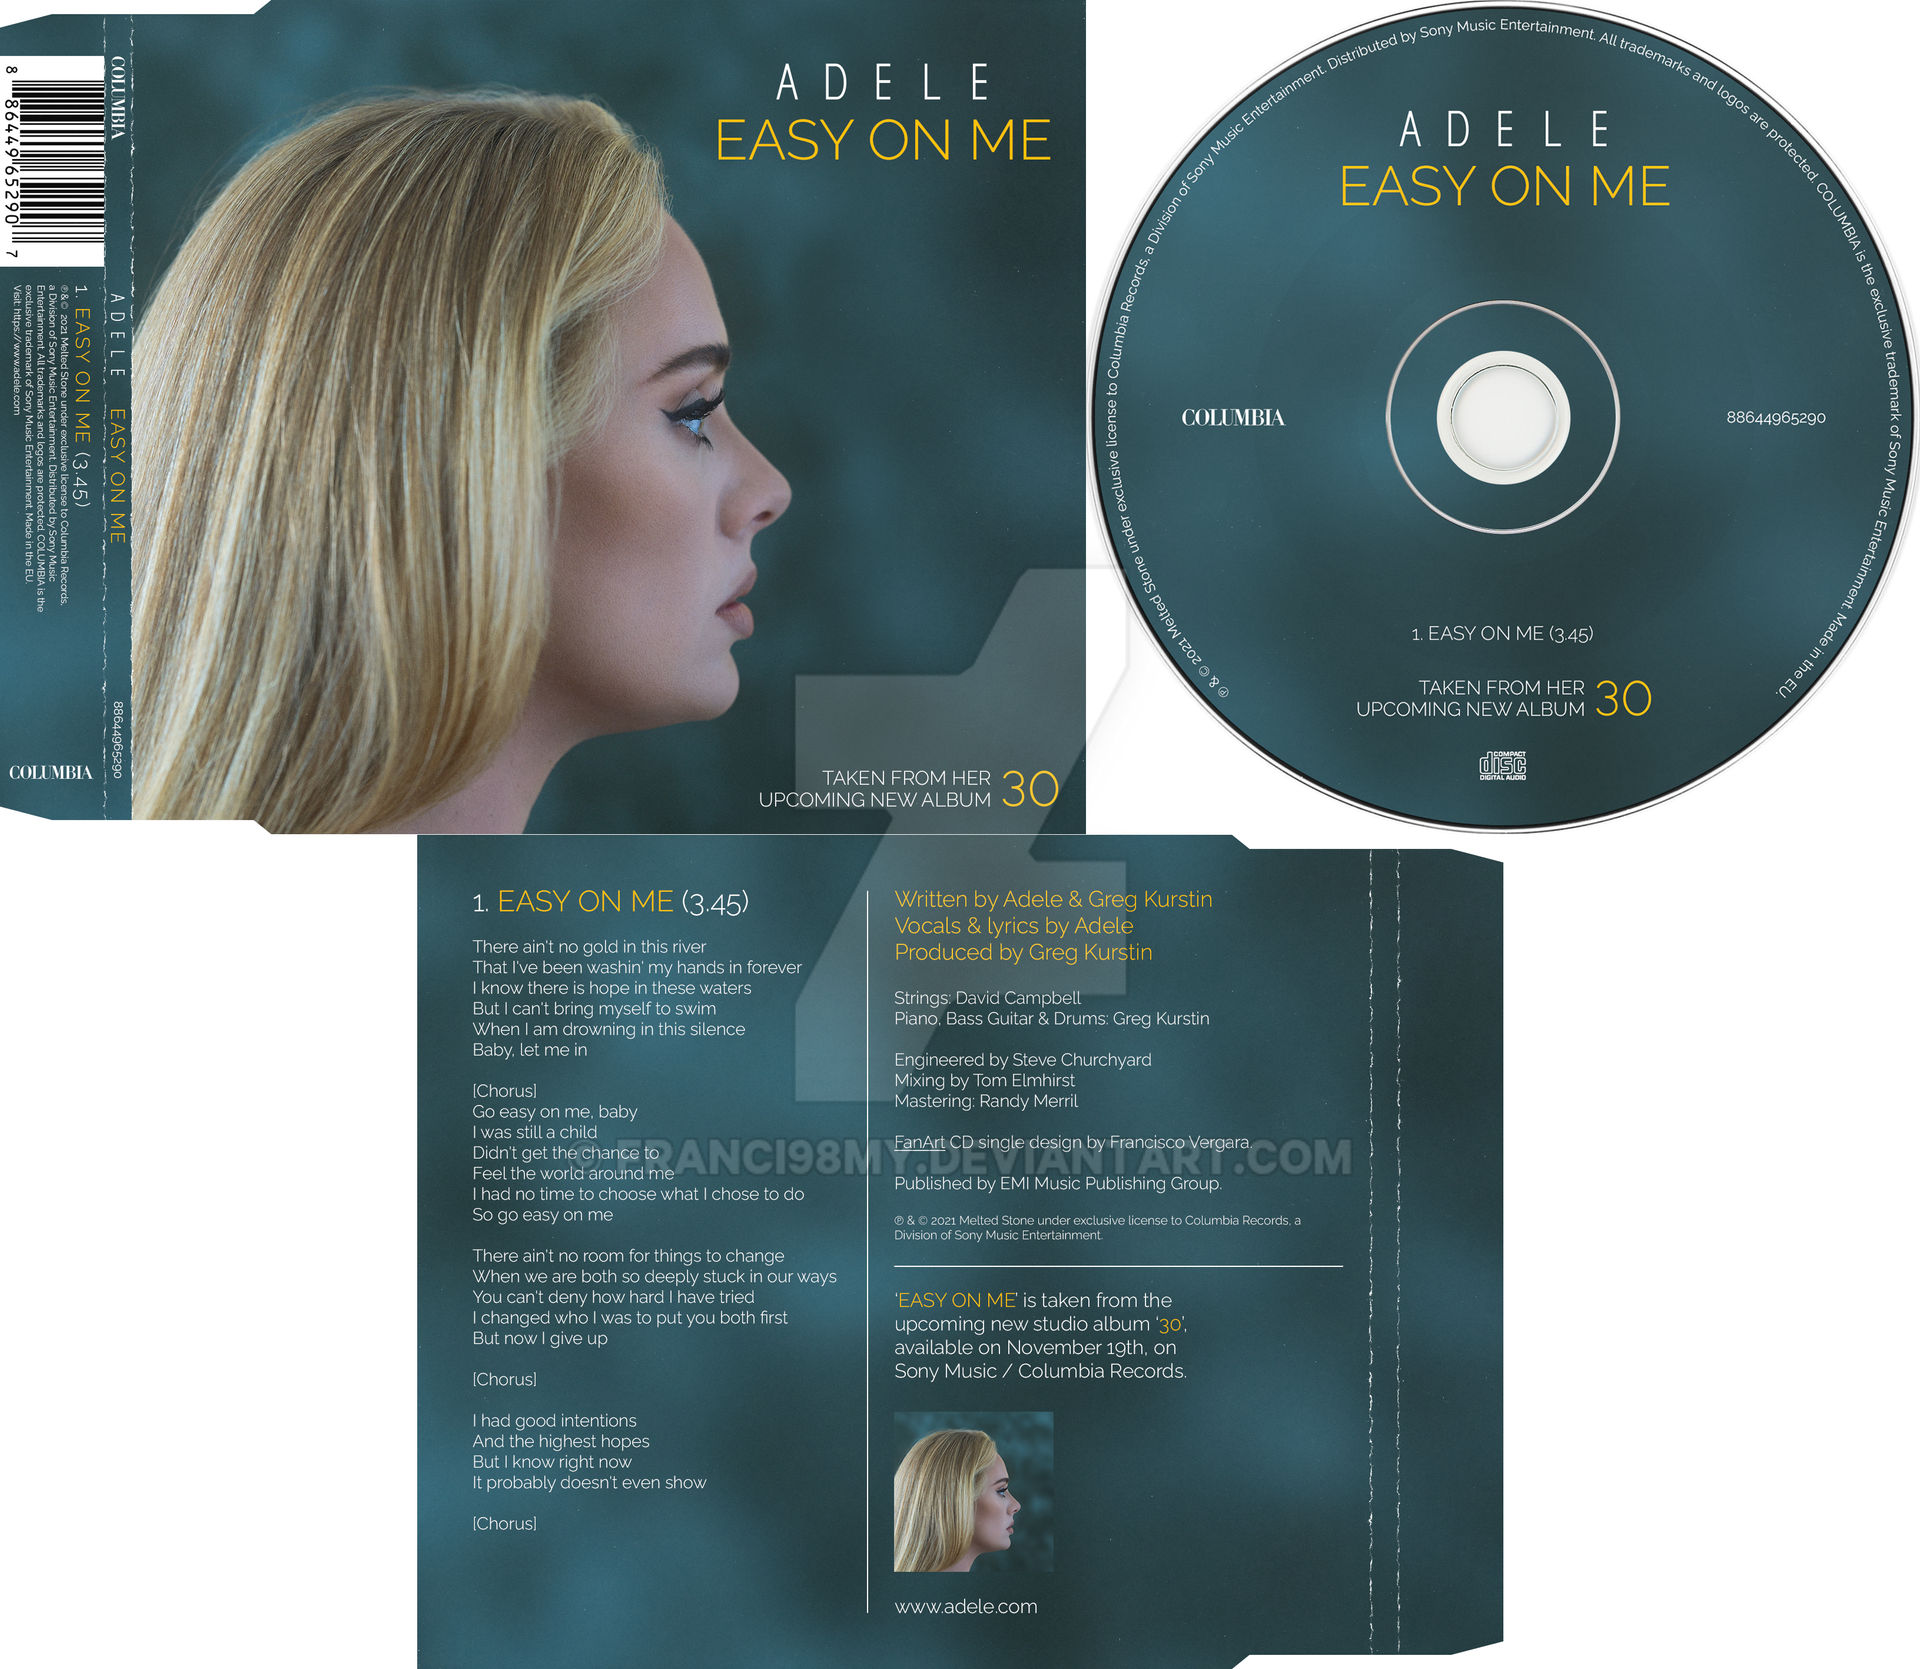 Adele - Easy on Me - CD Single Fan Design (Ver. 1) by Franci98my on  DeviantArt